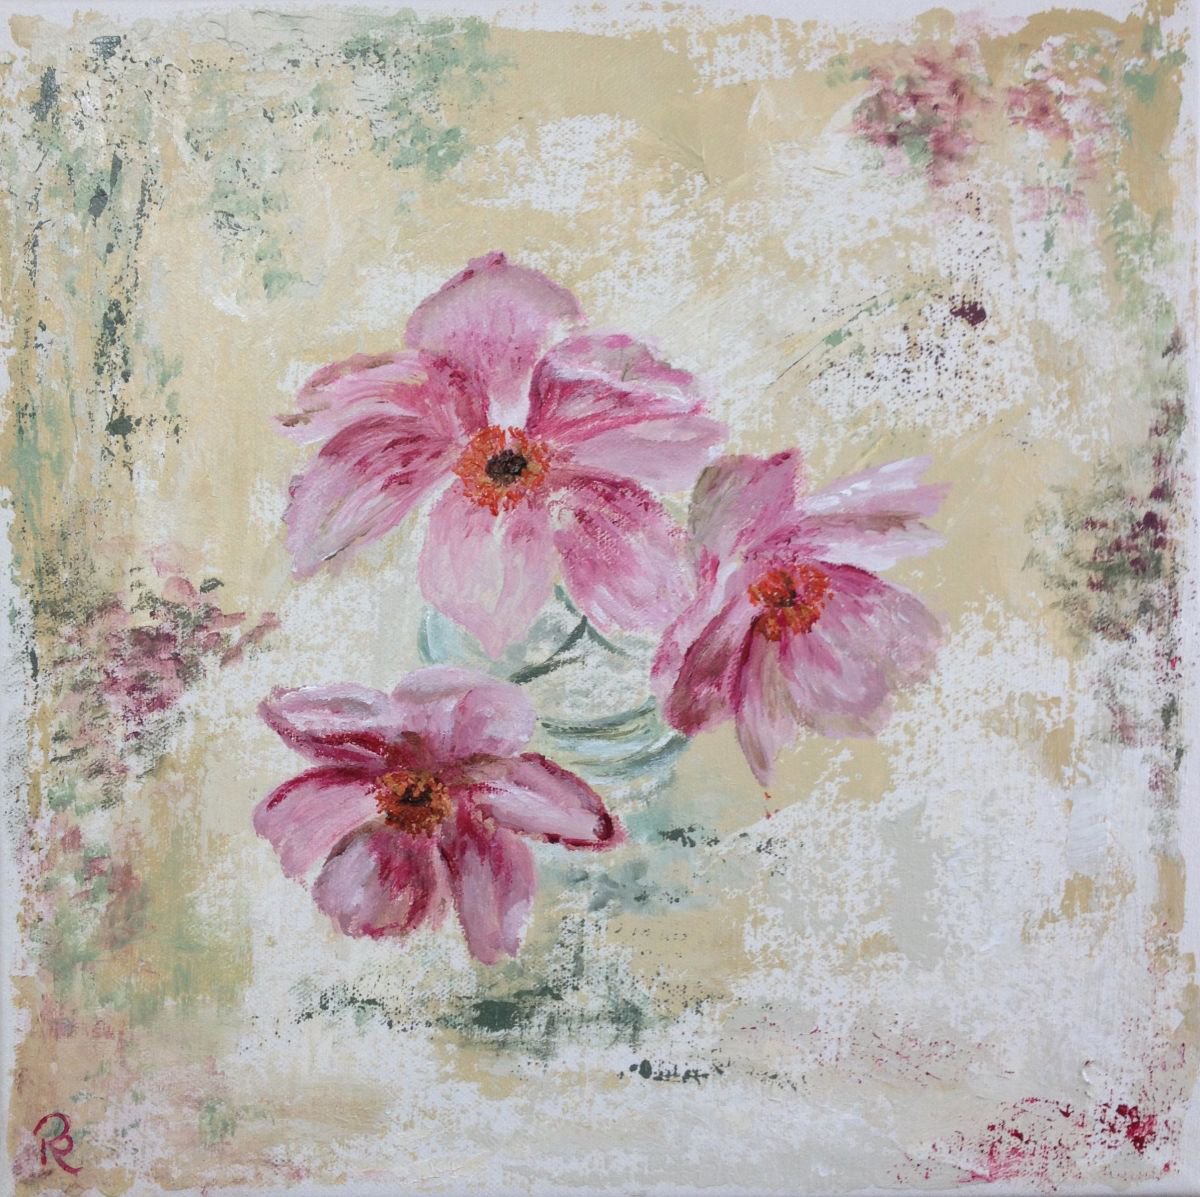 Japanese Anemones Trio Impressionist Flowers / Still Life by Rebecca Pells